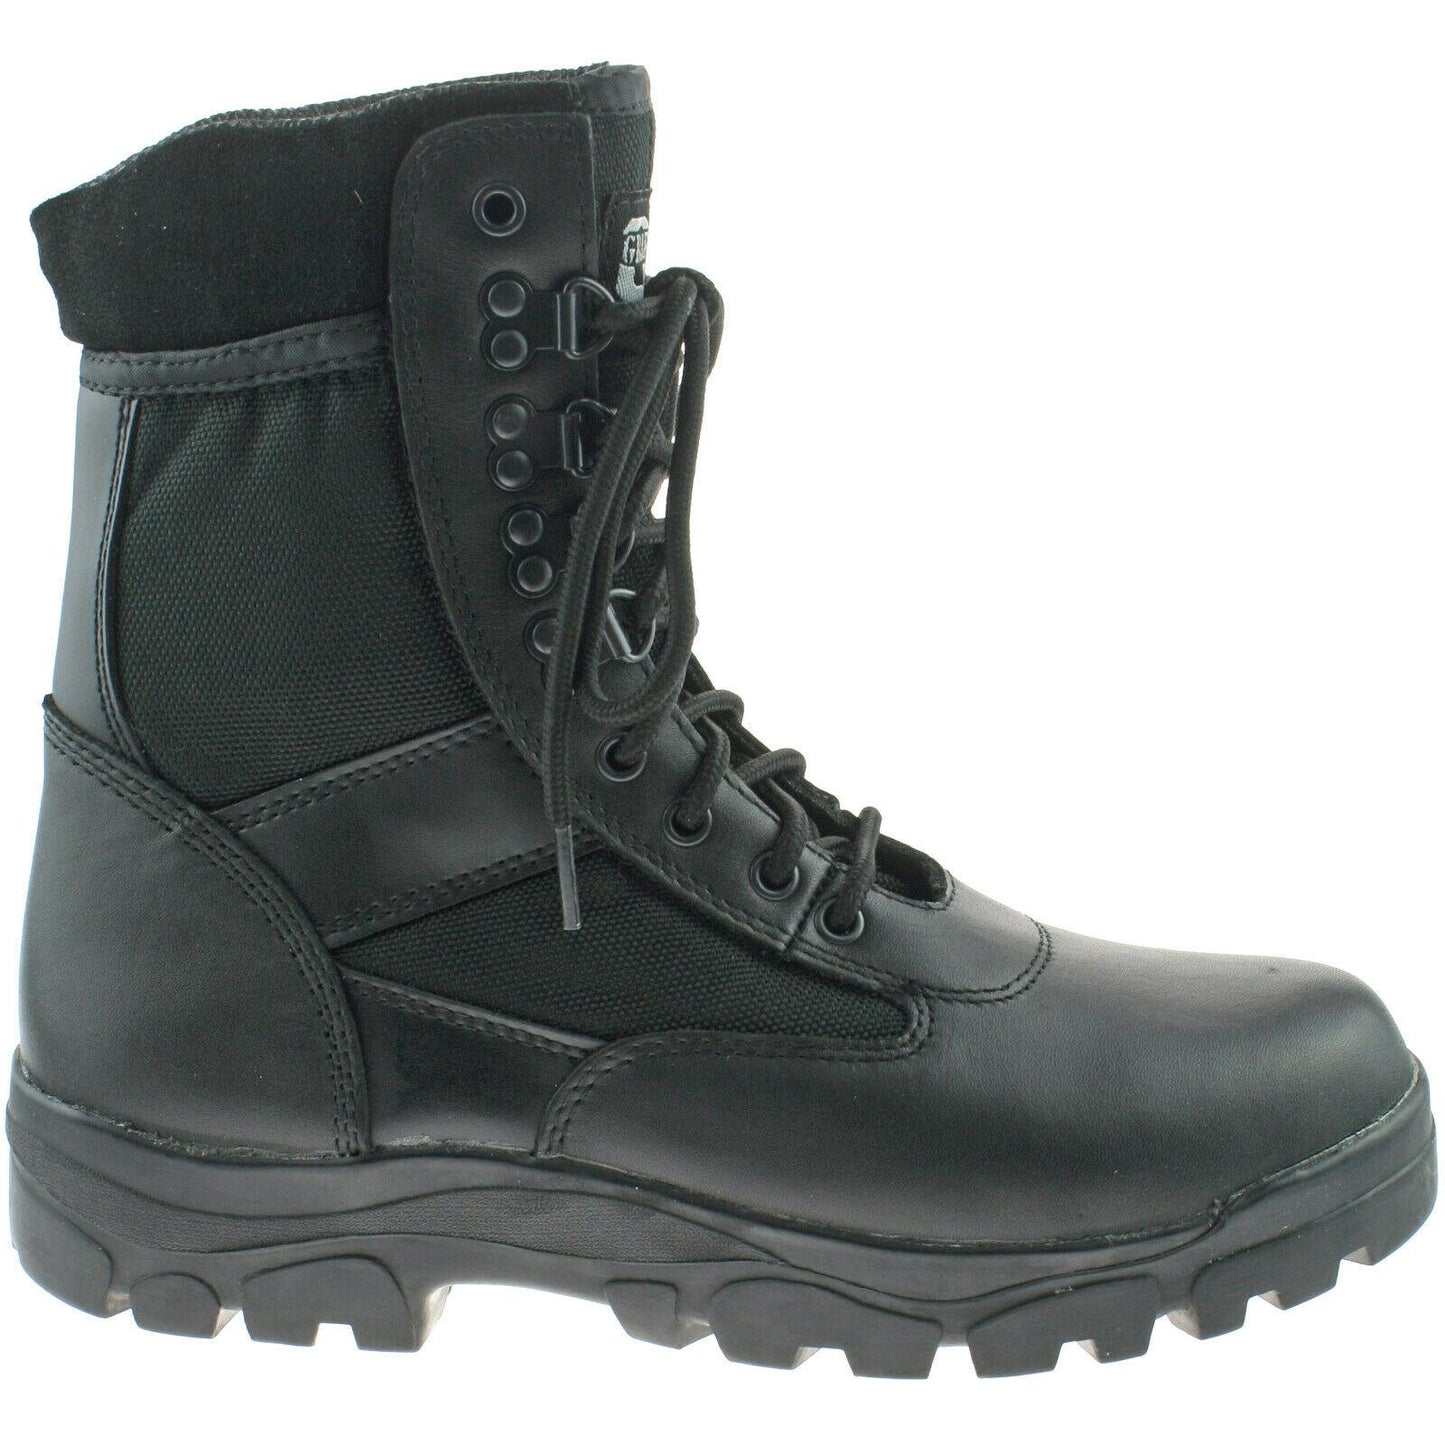 Mens Grafters Tactical Combat Boots Security Black M668A